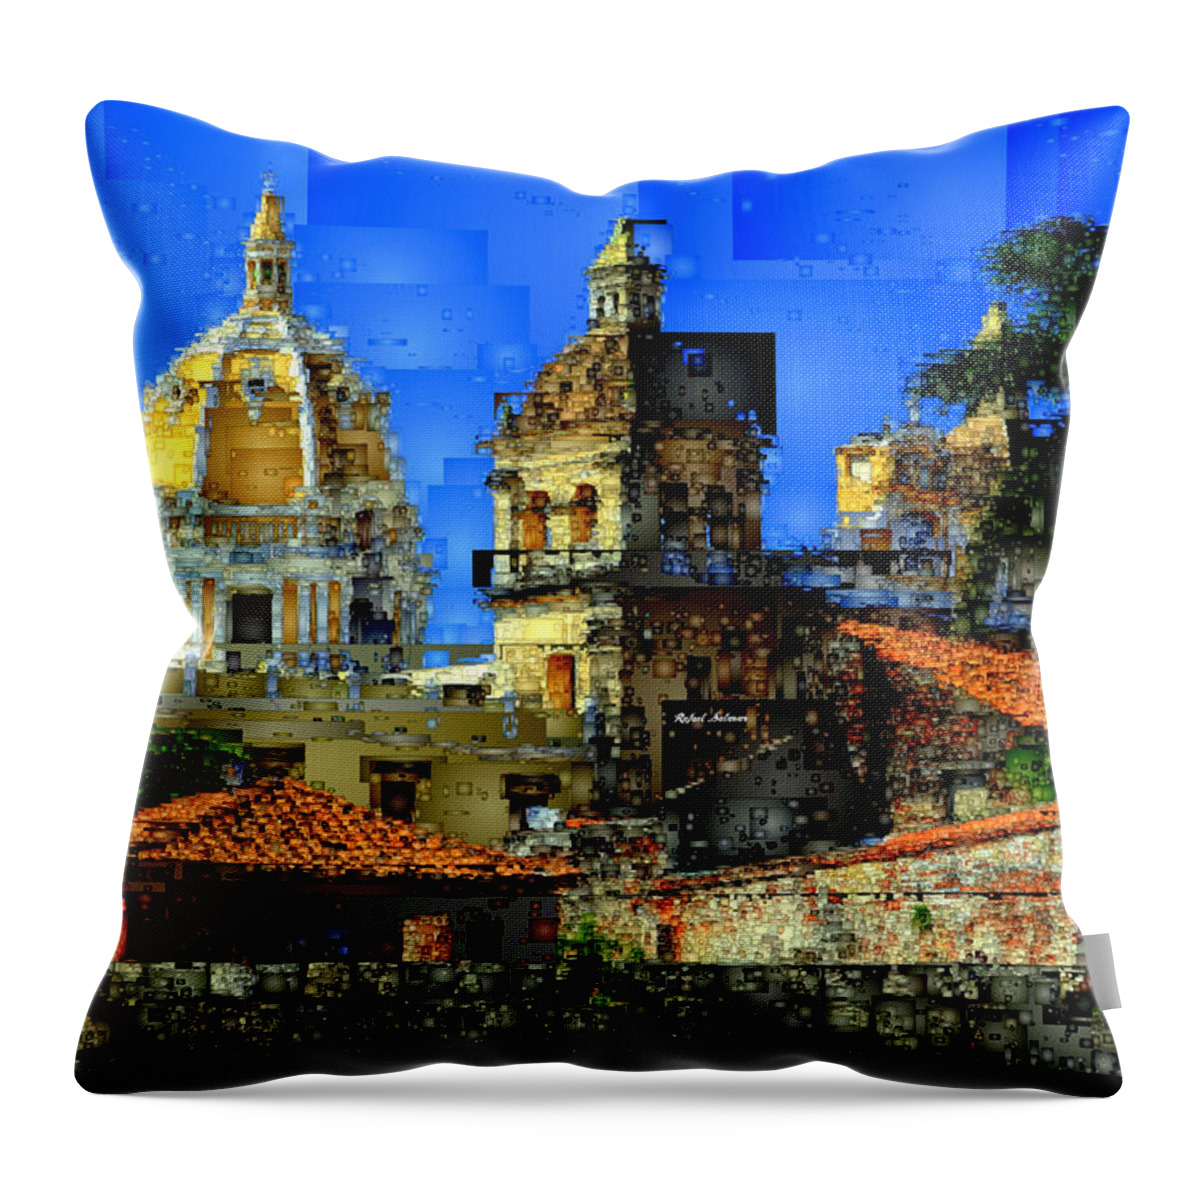 Rafael Salazar Throw Pillow featuring the digital art Cartagena Colombia #1 by Rafael Salazar